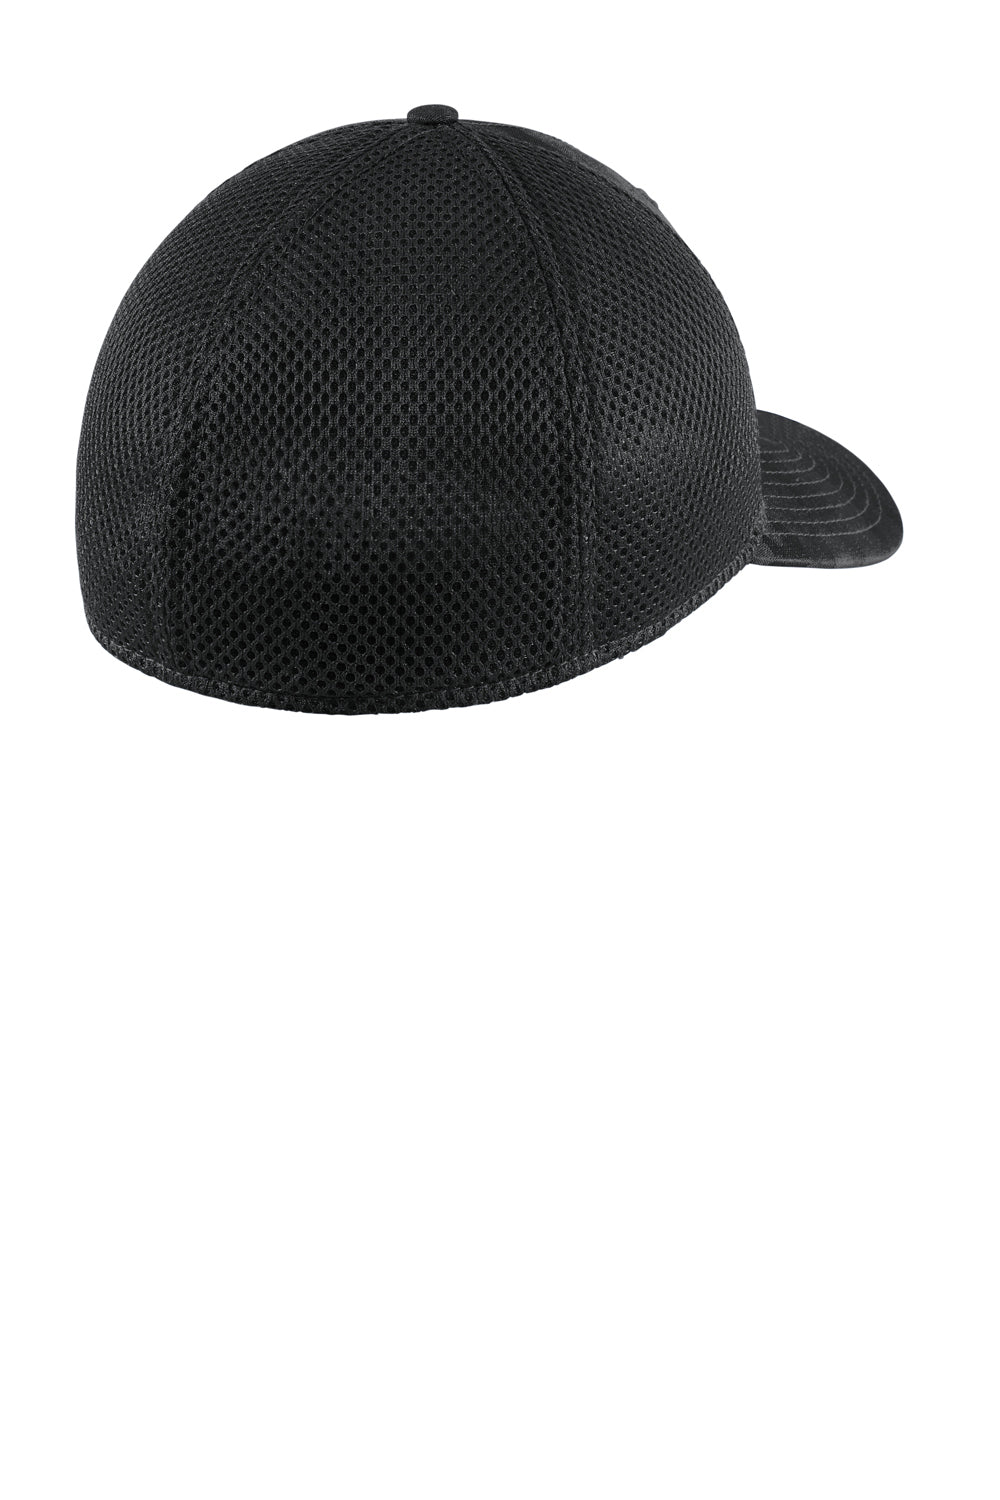 New Era NE1091 Tonal Camo Tech Mesh Stretch Fit Hat Black Camo Side